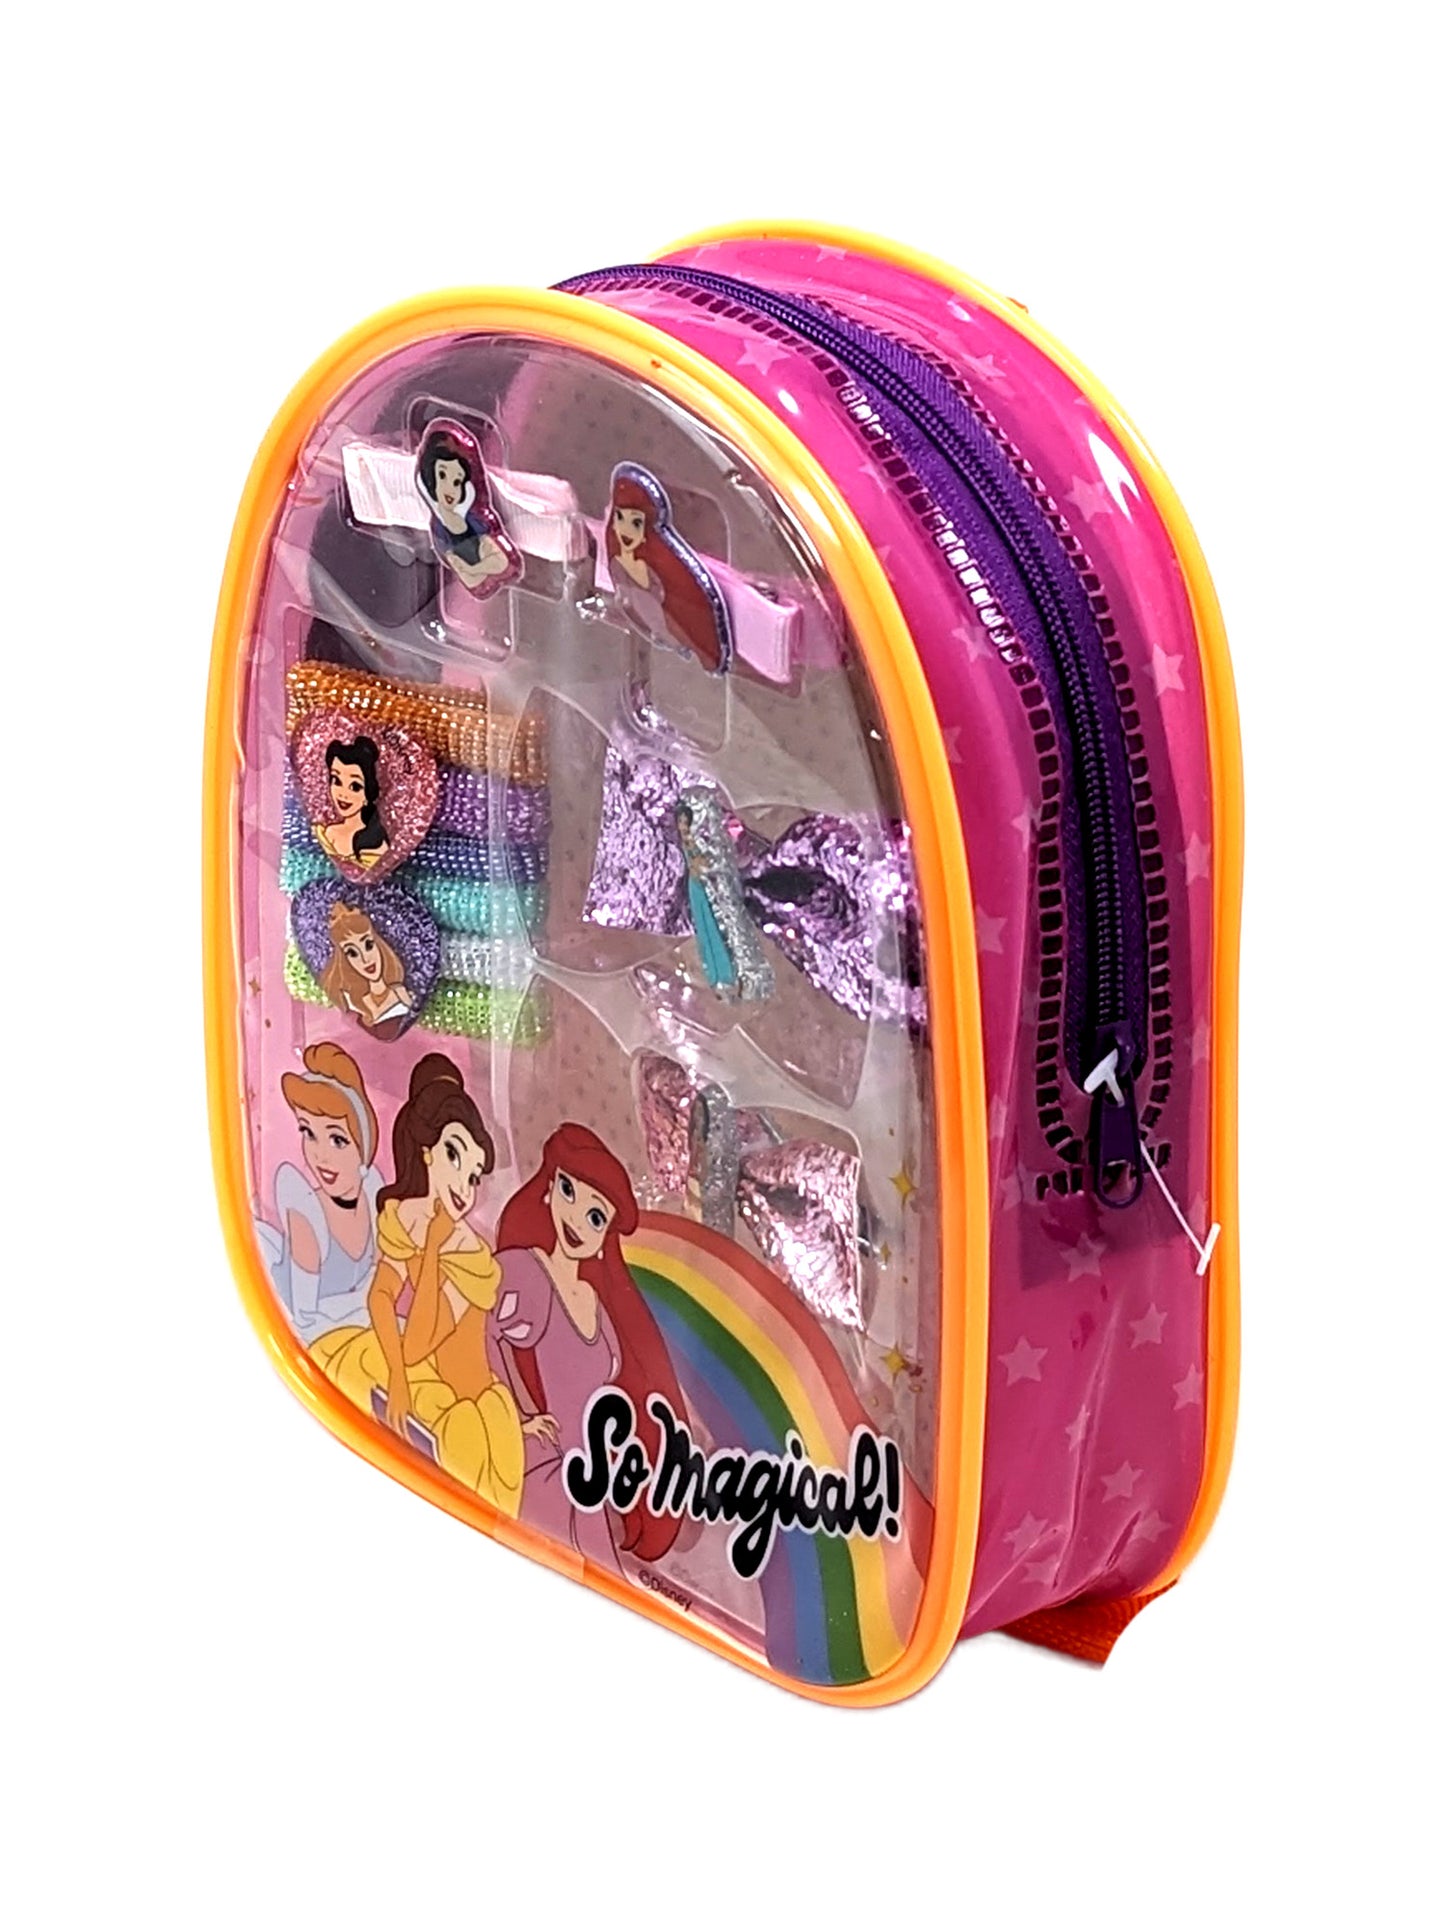 Disney Princesses Hair Accessory Backpack Girls Hair Clips Bows Ties (10-Pcs)